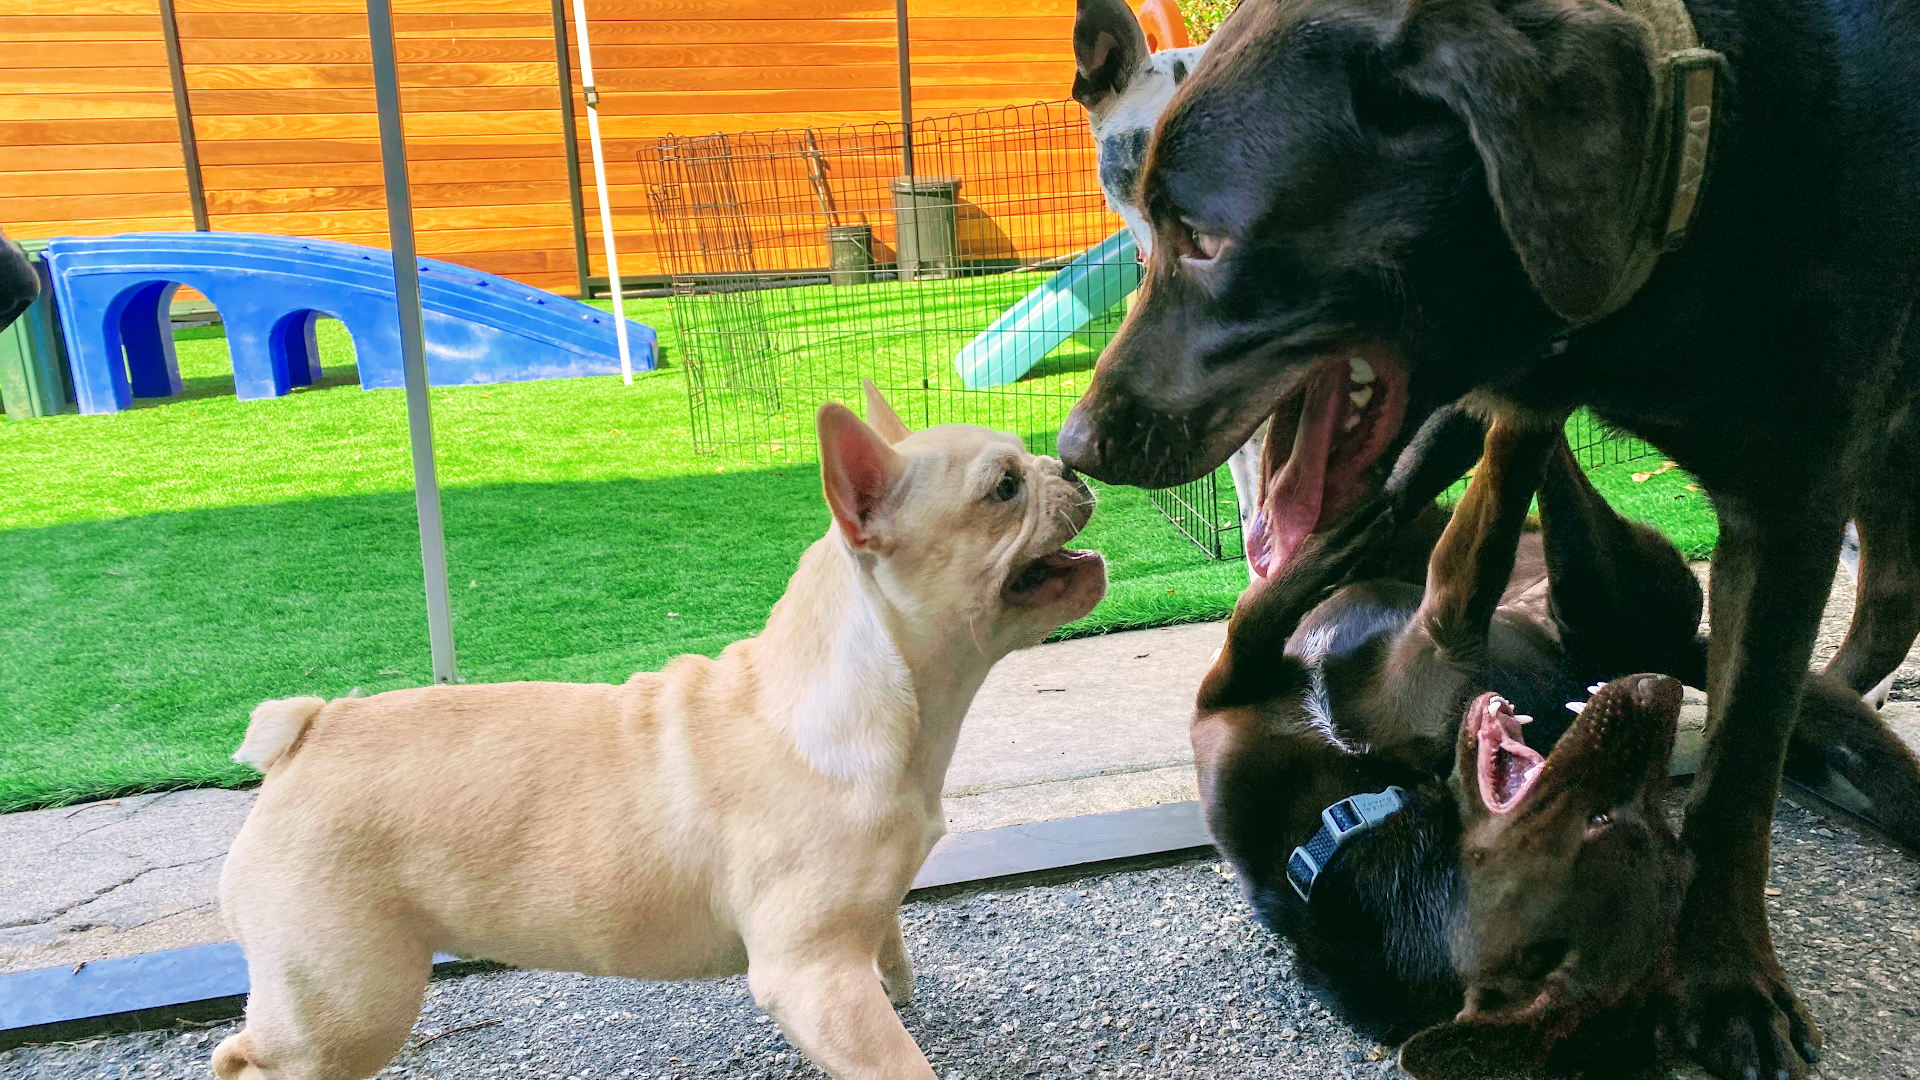 The Ranch Dog Training